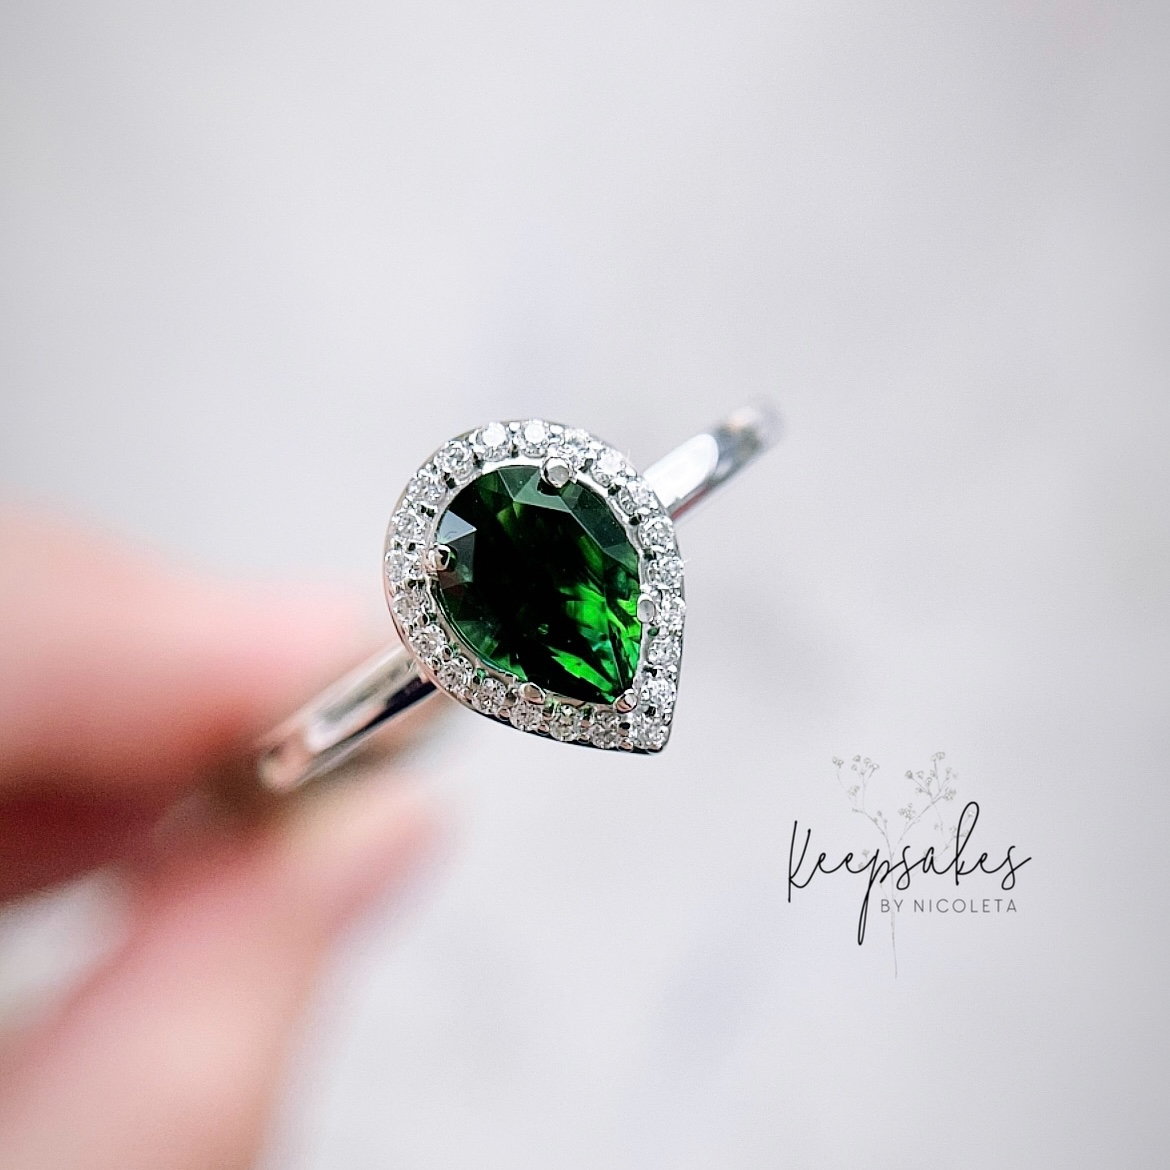 Verde Smeraldo scuro – Dark Emerald green